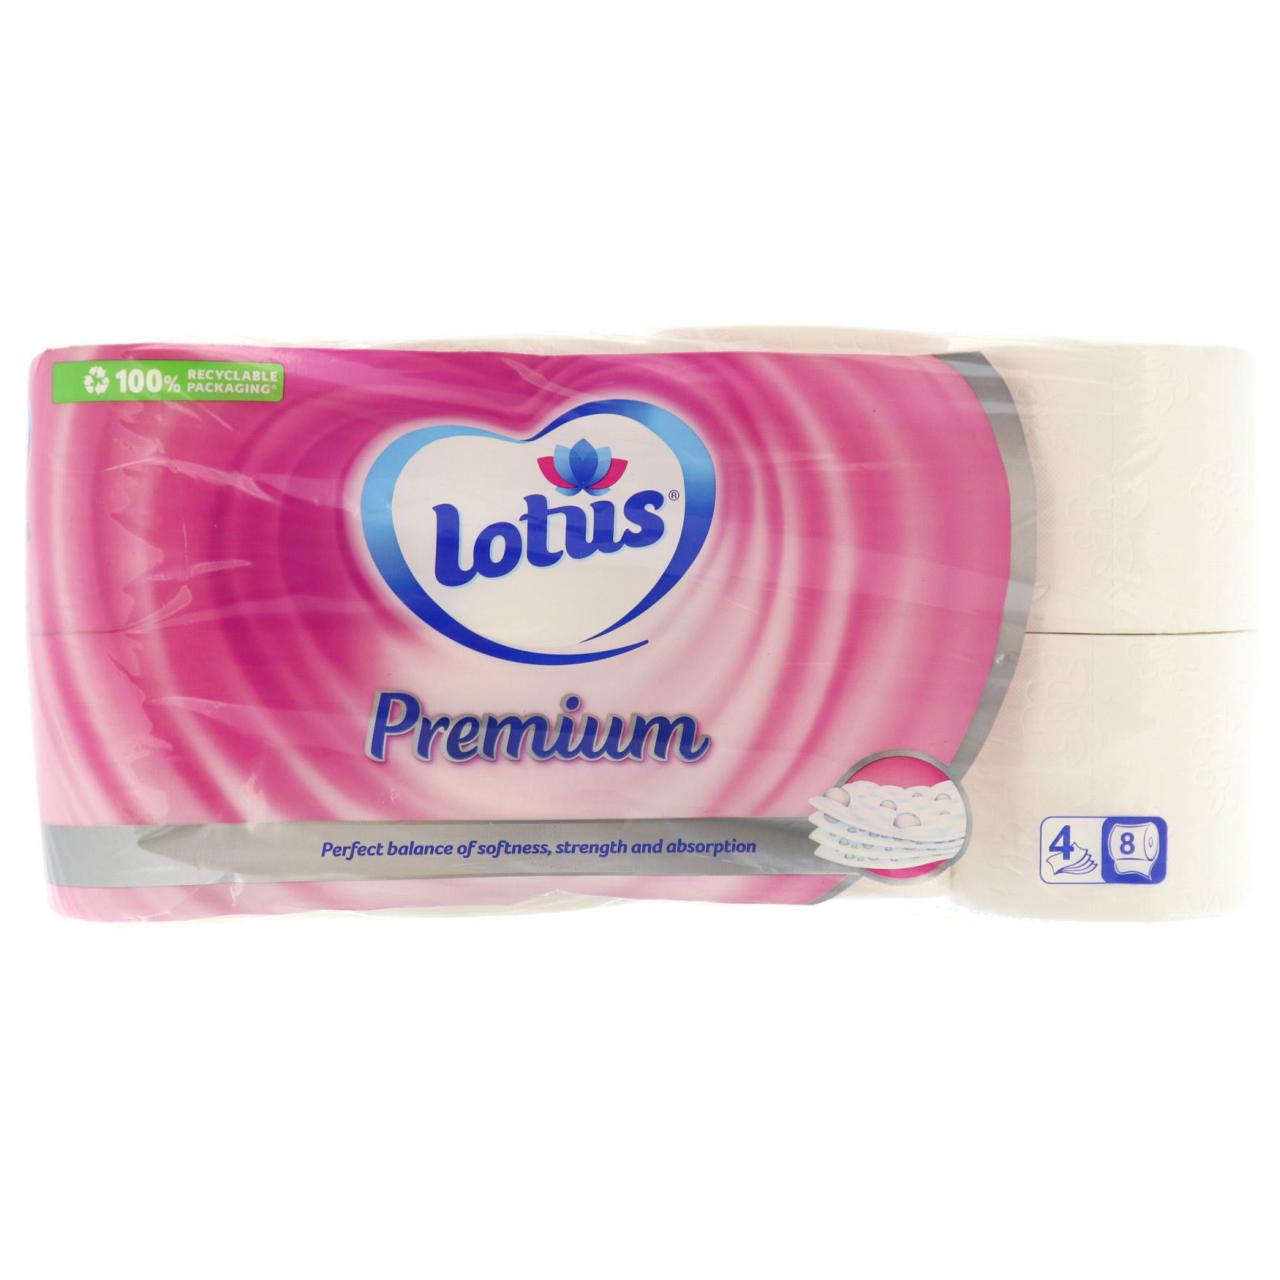 Lotus Premium Toiletpapir/Toilettenpapier 4lagig 8x150 Blatt